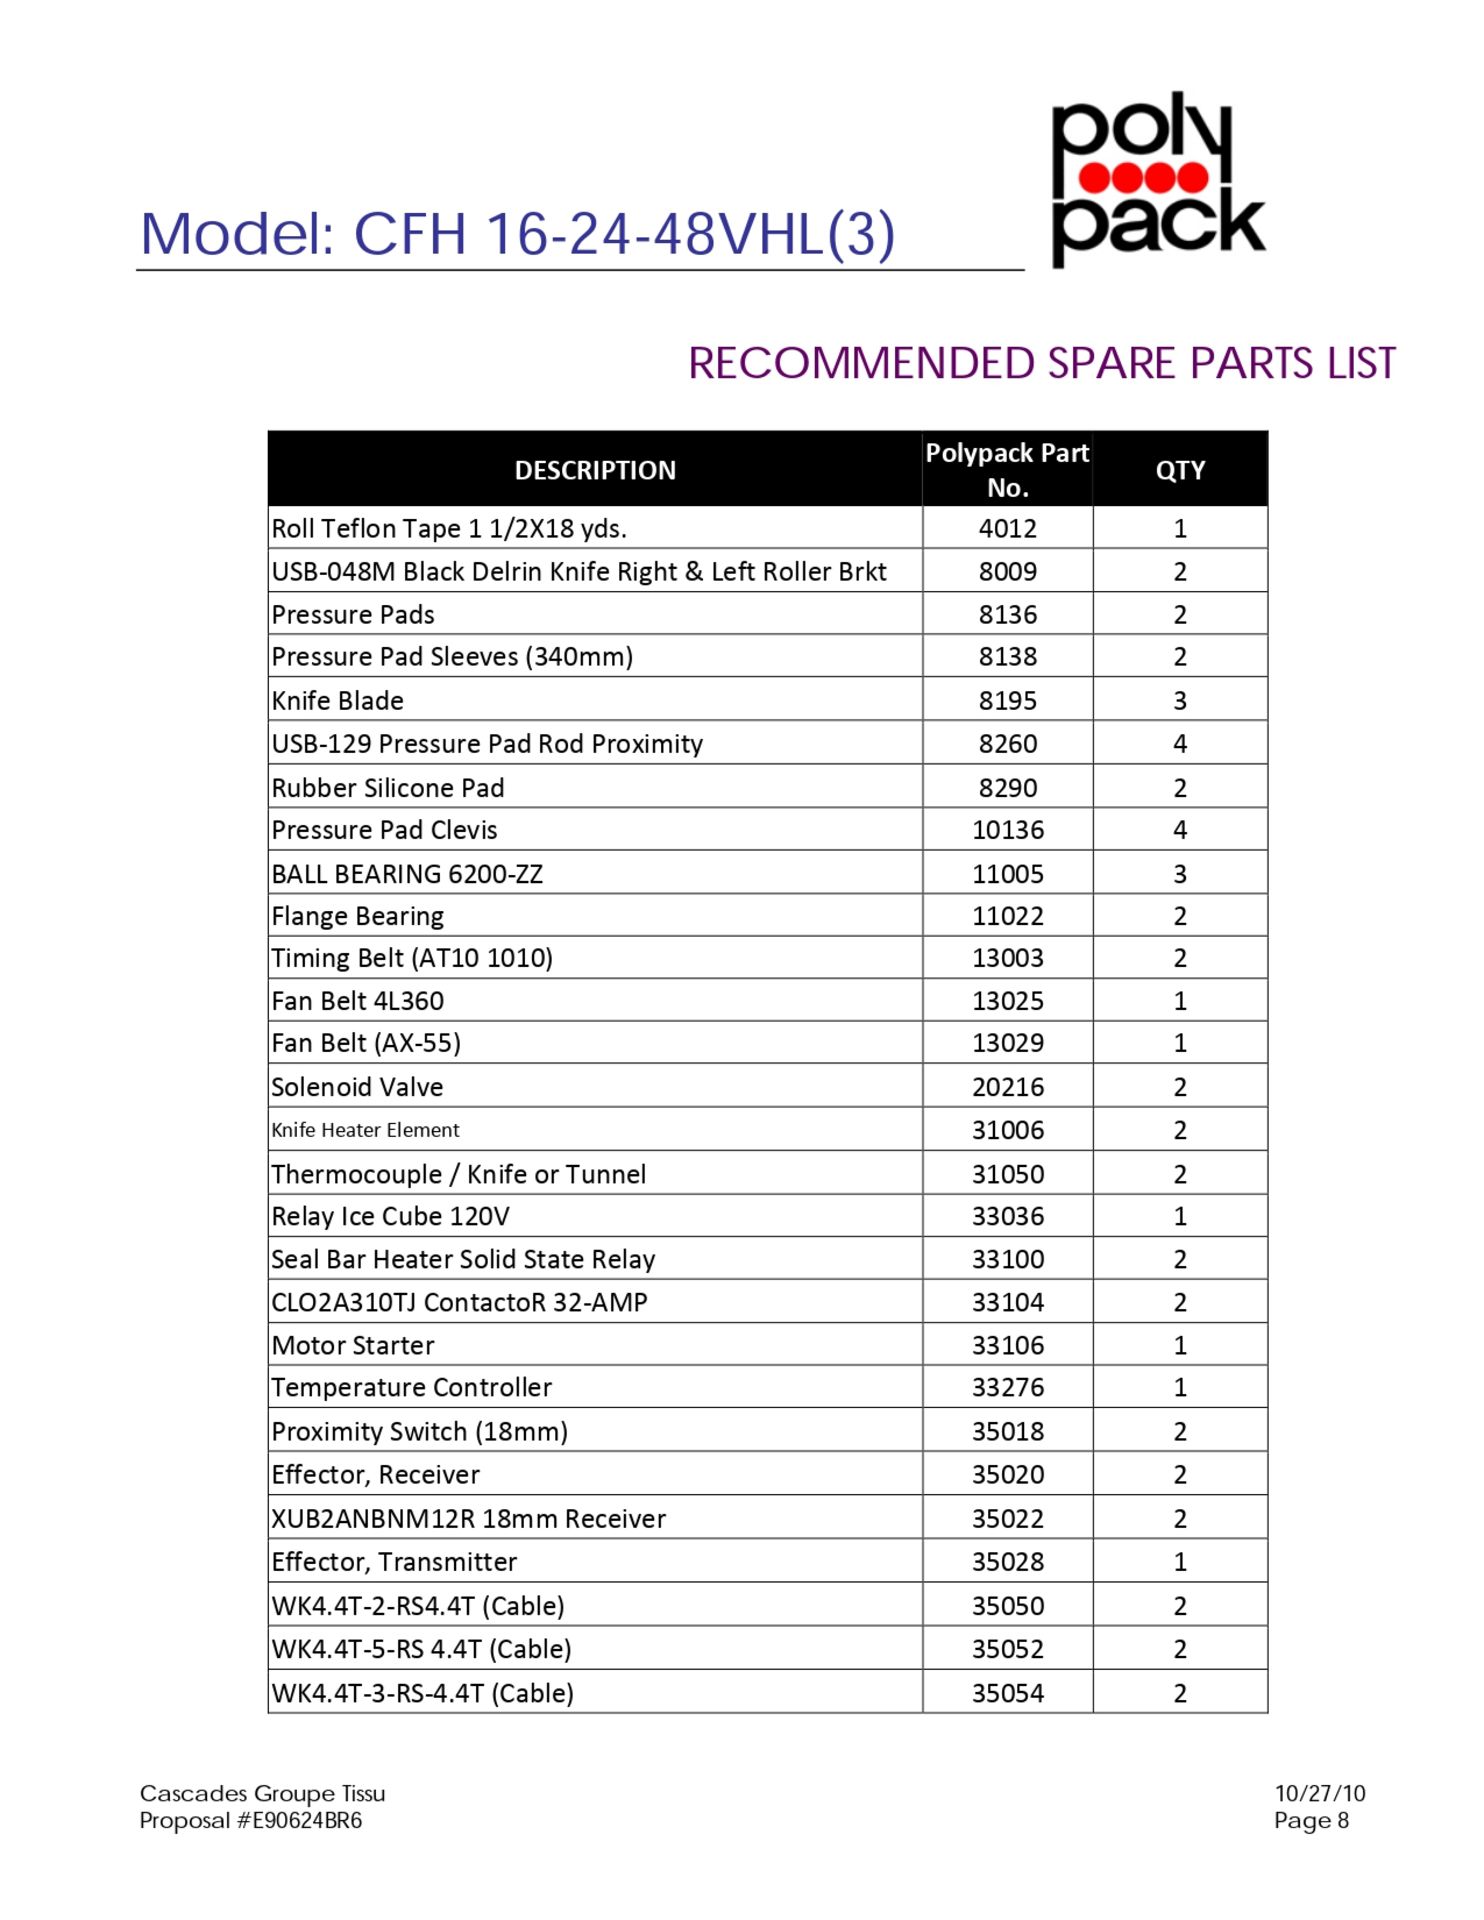 2010 SHRINK WRAPPER FULLY AUTOMATIC, BRAND: POLY PACK, MODEL CFH 16-24-48VHL(3), 600V, 40AMP, - Image 20 of 29